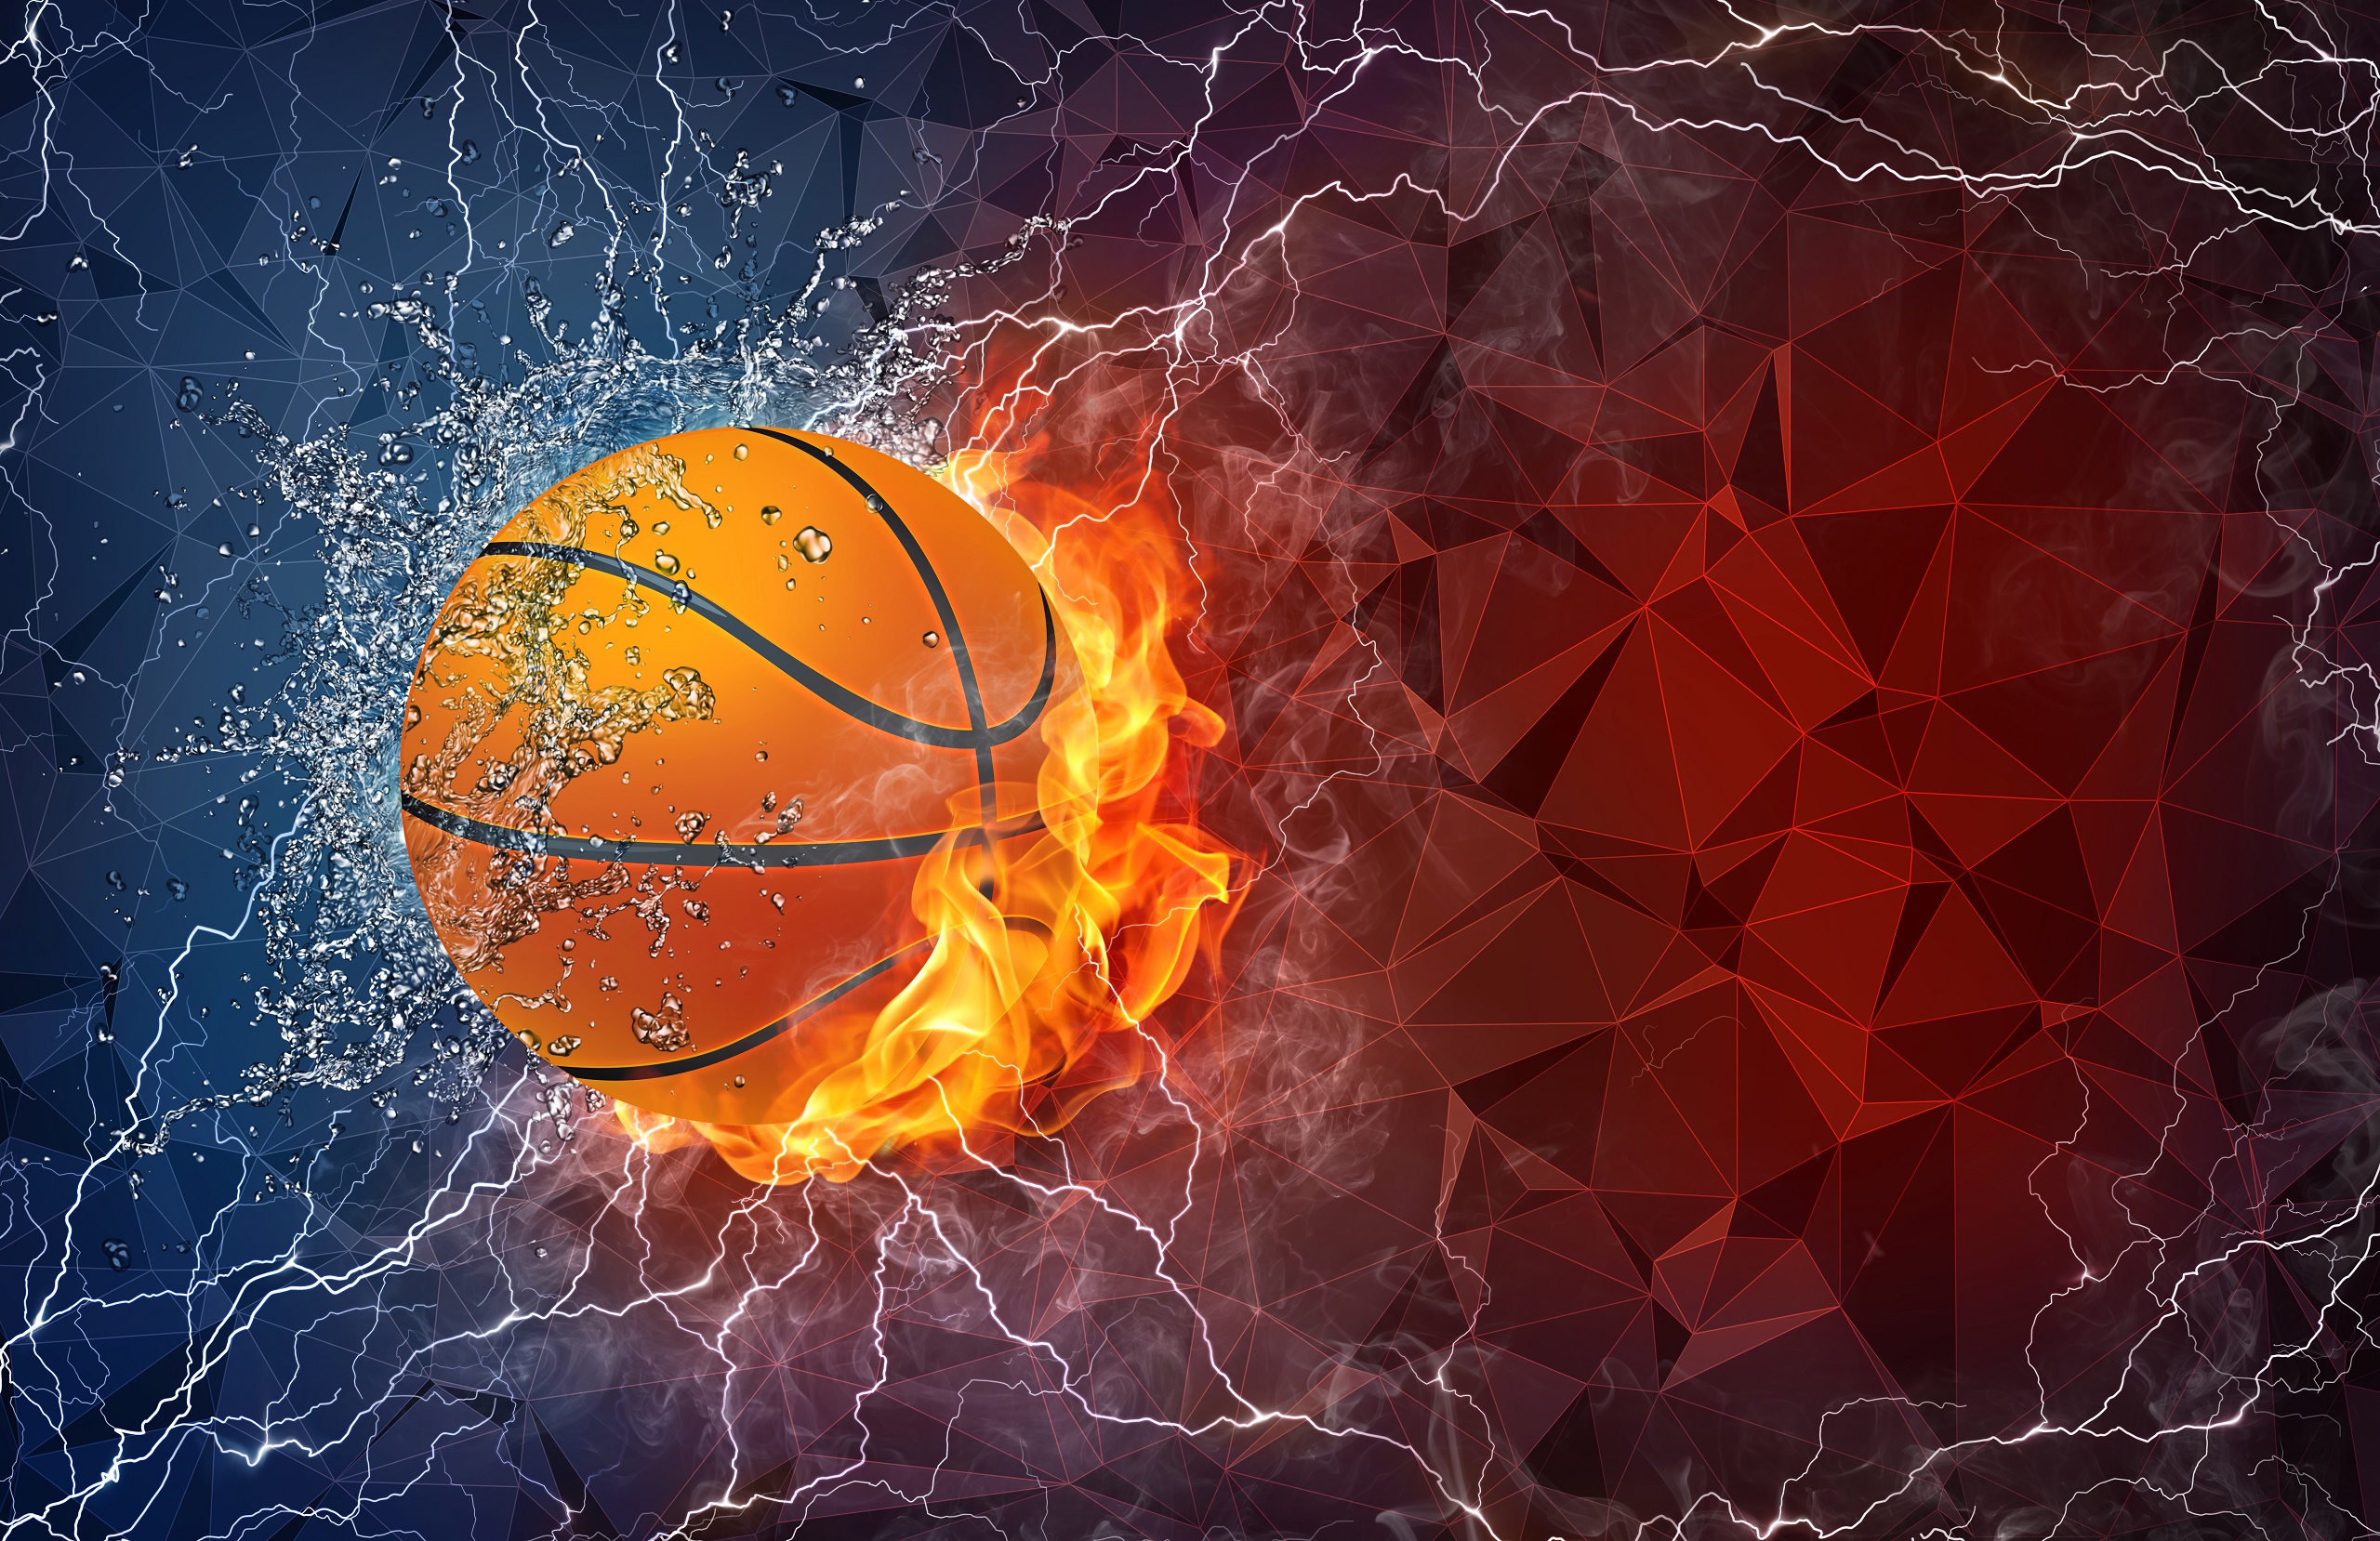 Wallpaper basketball floor ball shadows images for desktop section  спорт  download